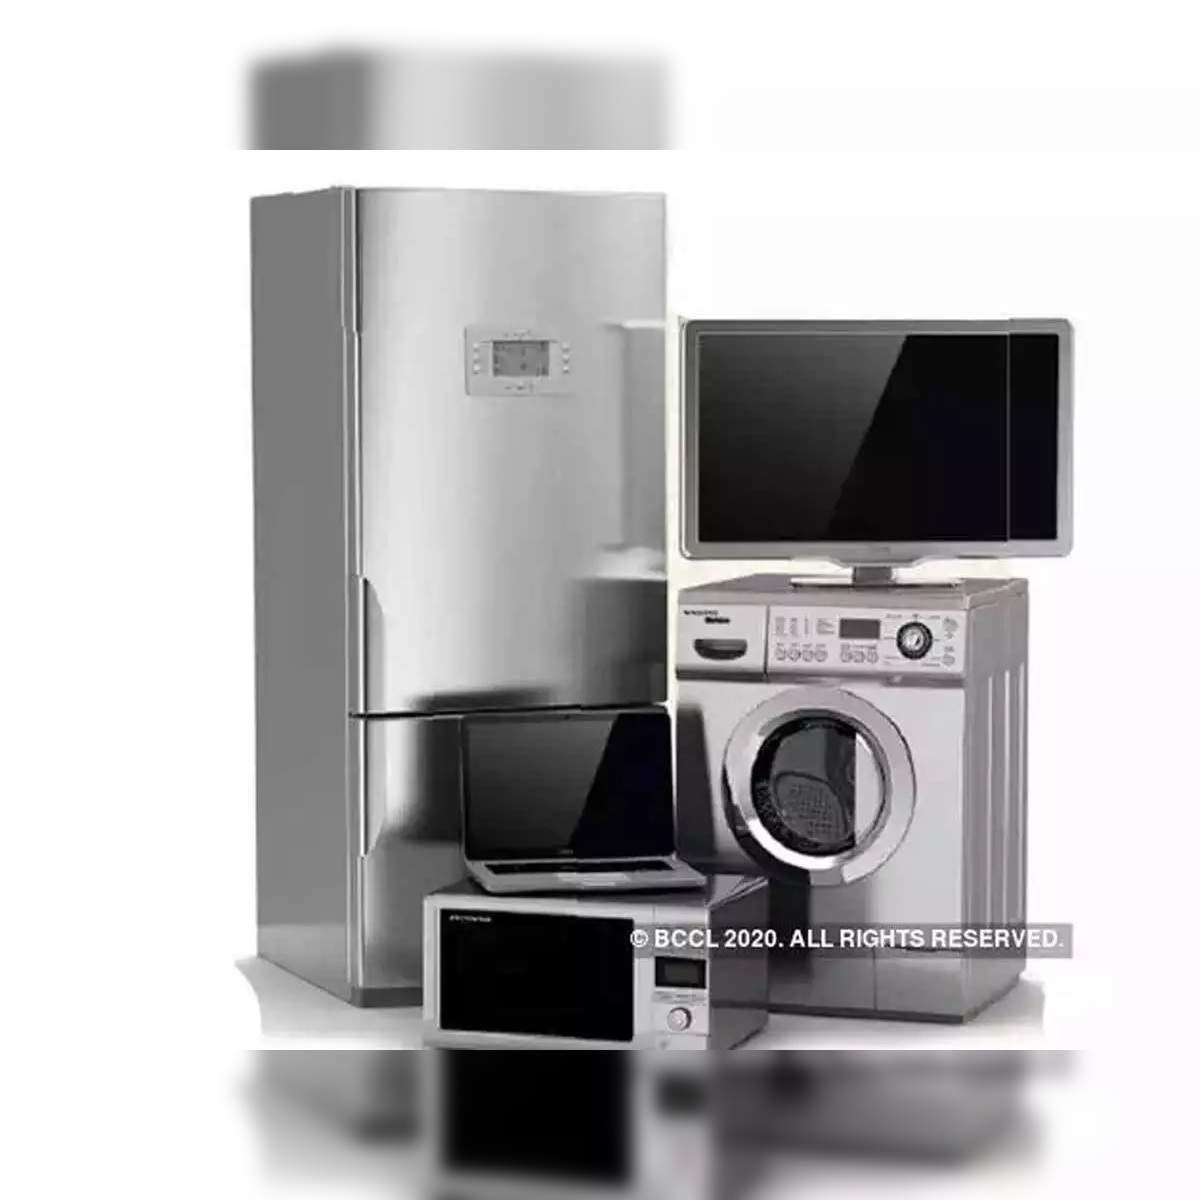 Buy Home & Kitchen Appliances Online in India - TTK Prestige